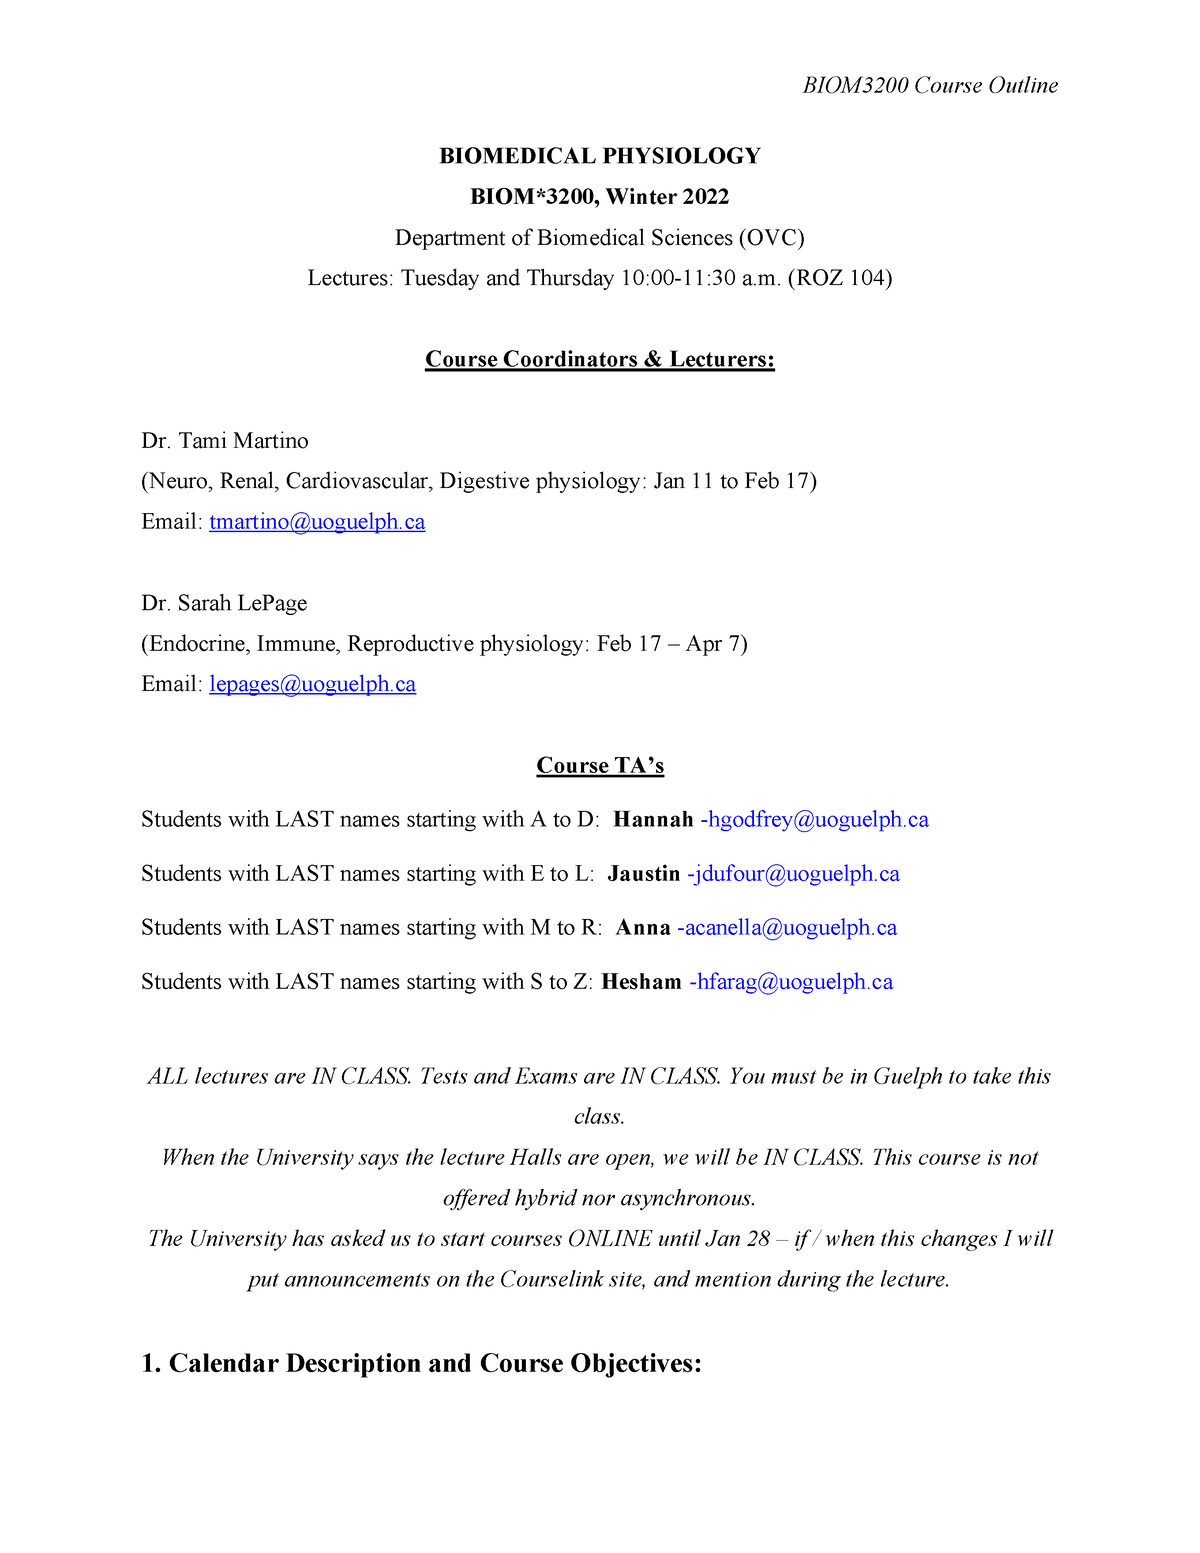 CS201 Course Outline - CS 201 (Winter 2022) Course Outline 1 UNIVERSITY OF  REGINA DEPARTMENT OF - Studocu